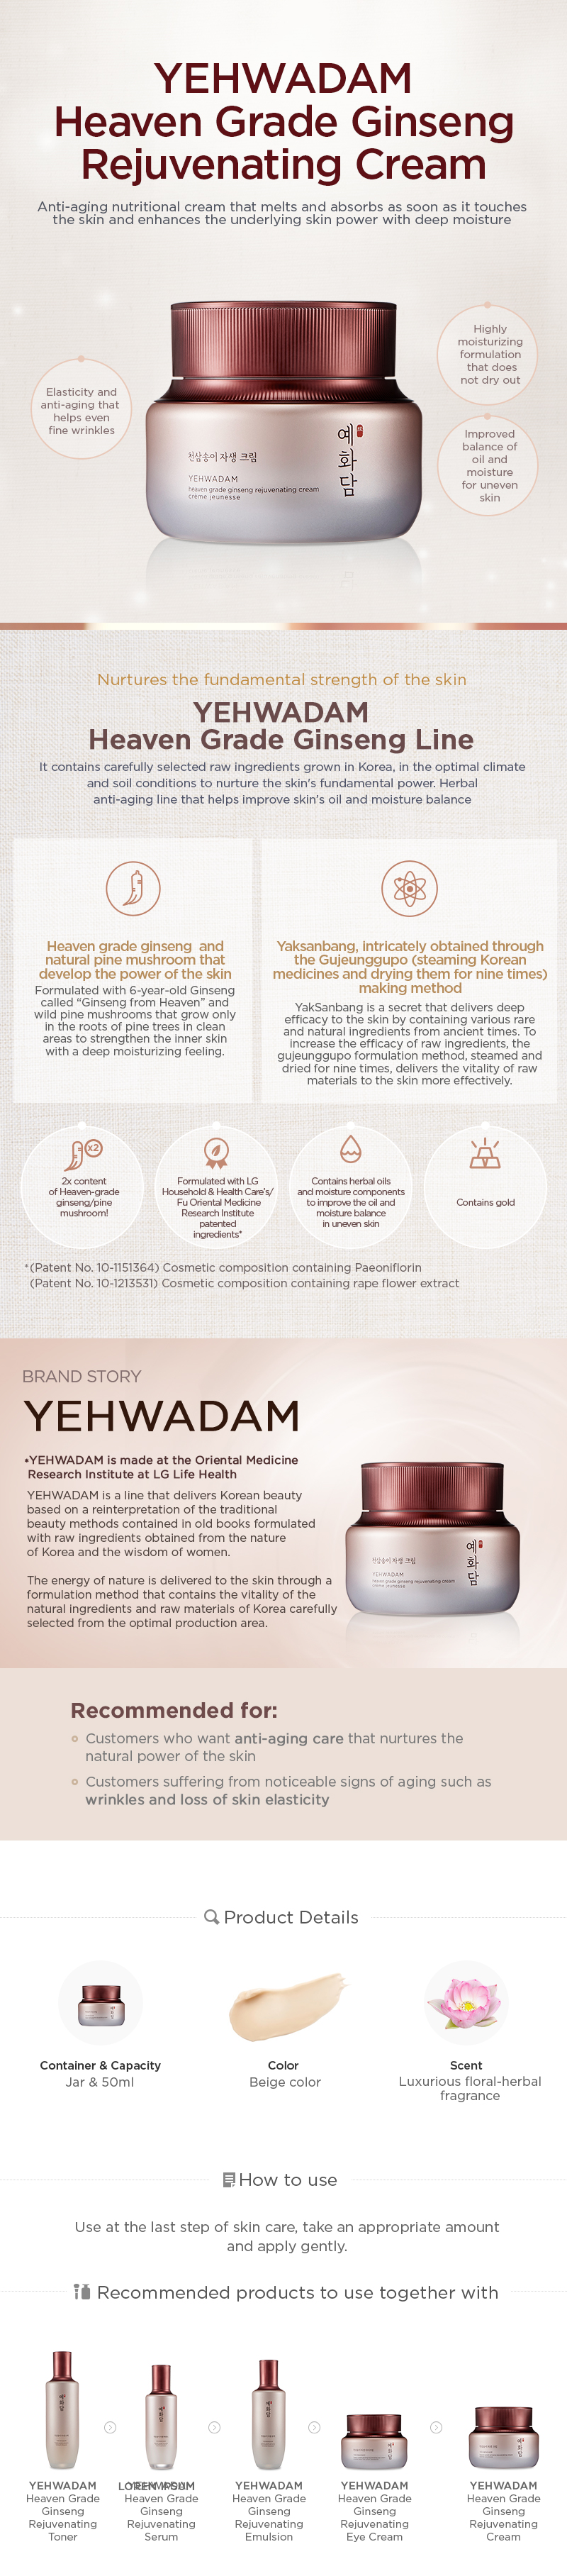 Yehwadam Heaven Grade Ginseng Rejuvenating Cream